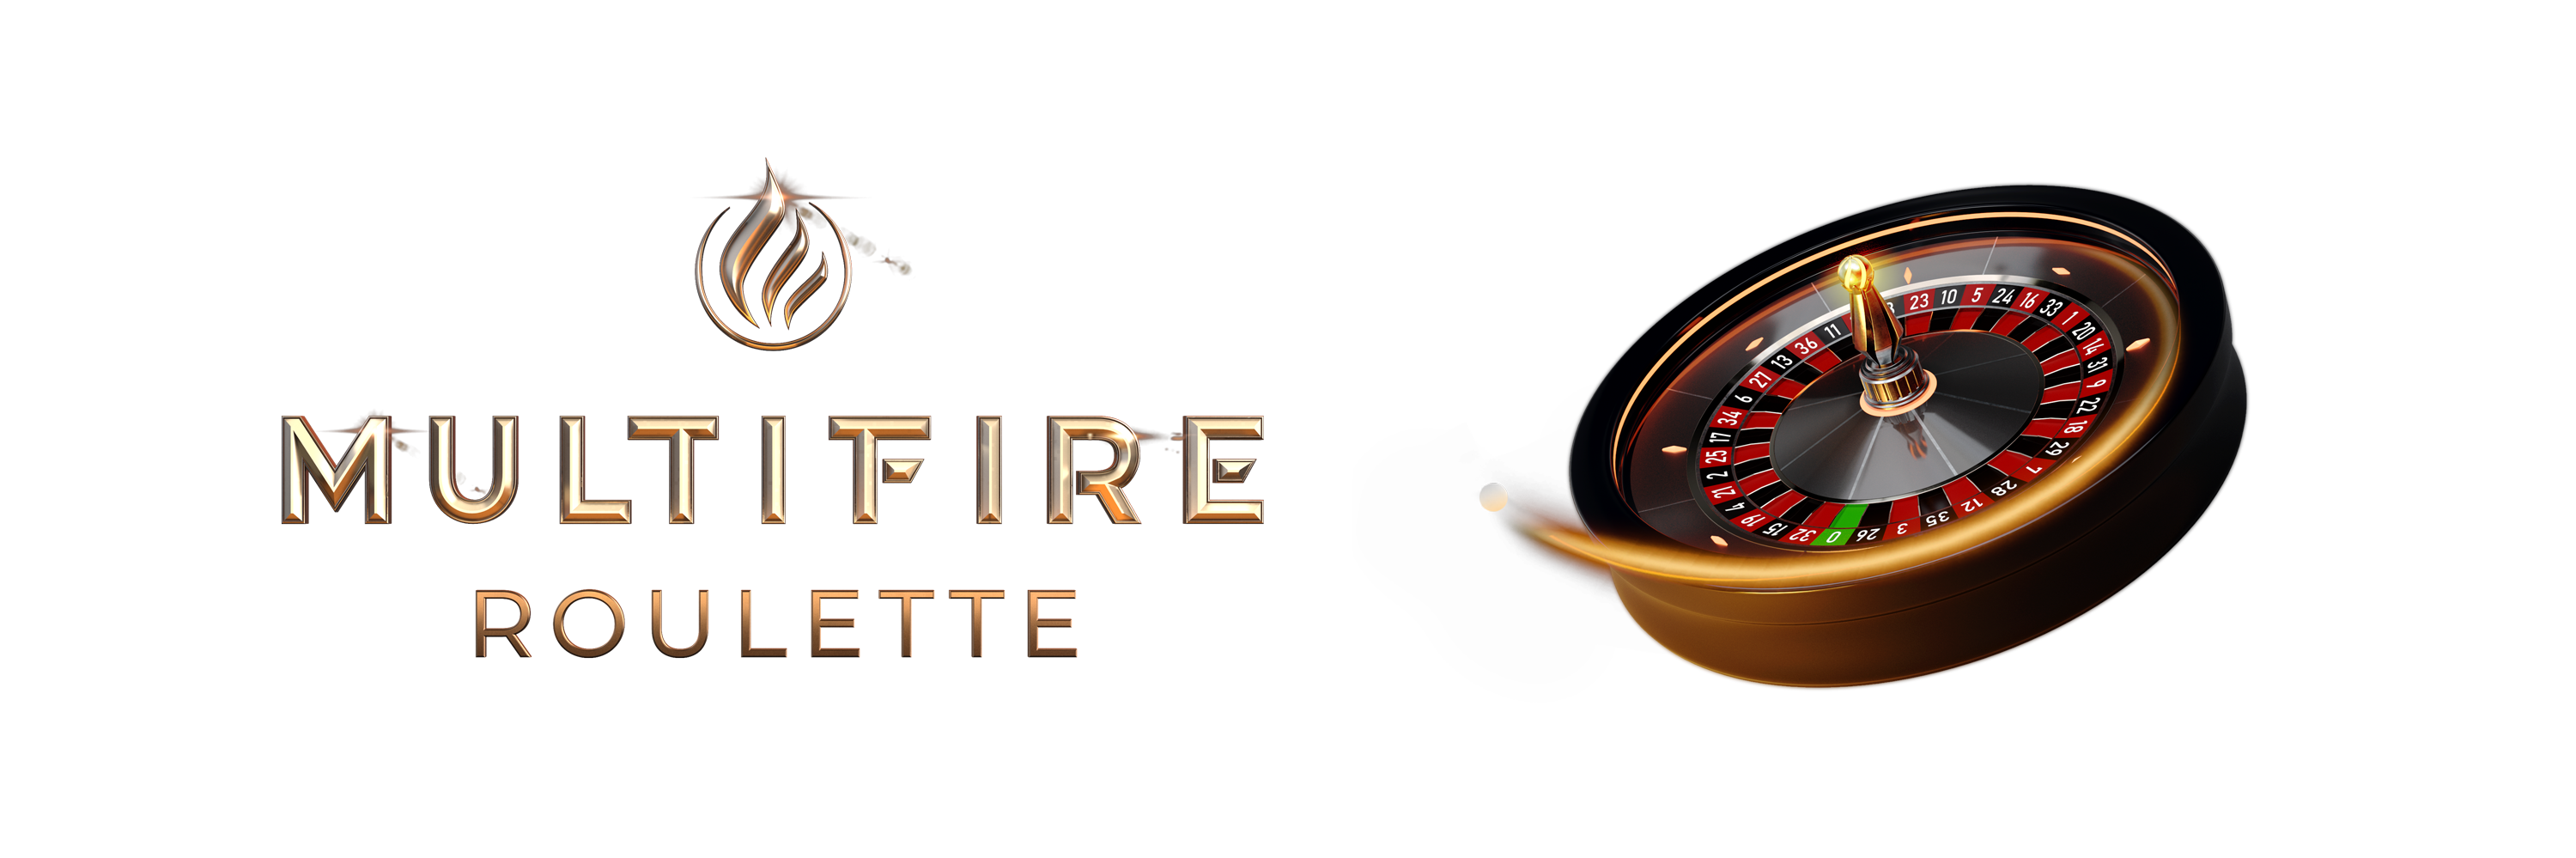 Multifire roulette live